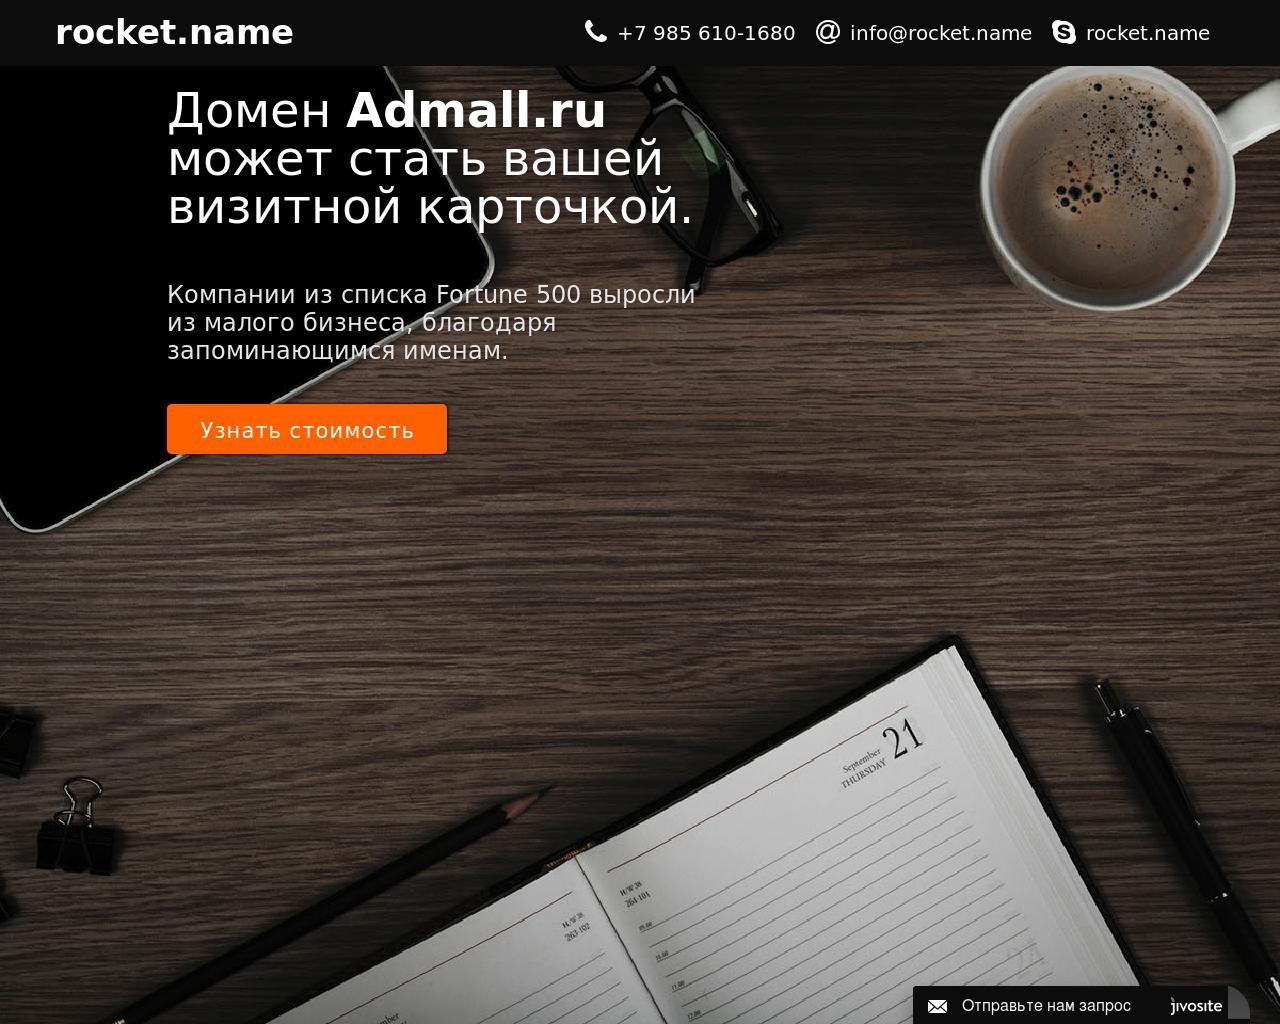 Изображение сайта admall.ru в разрешении 1280x1024